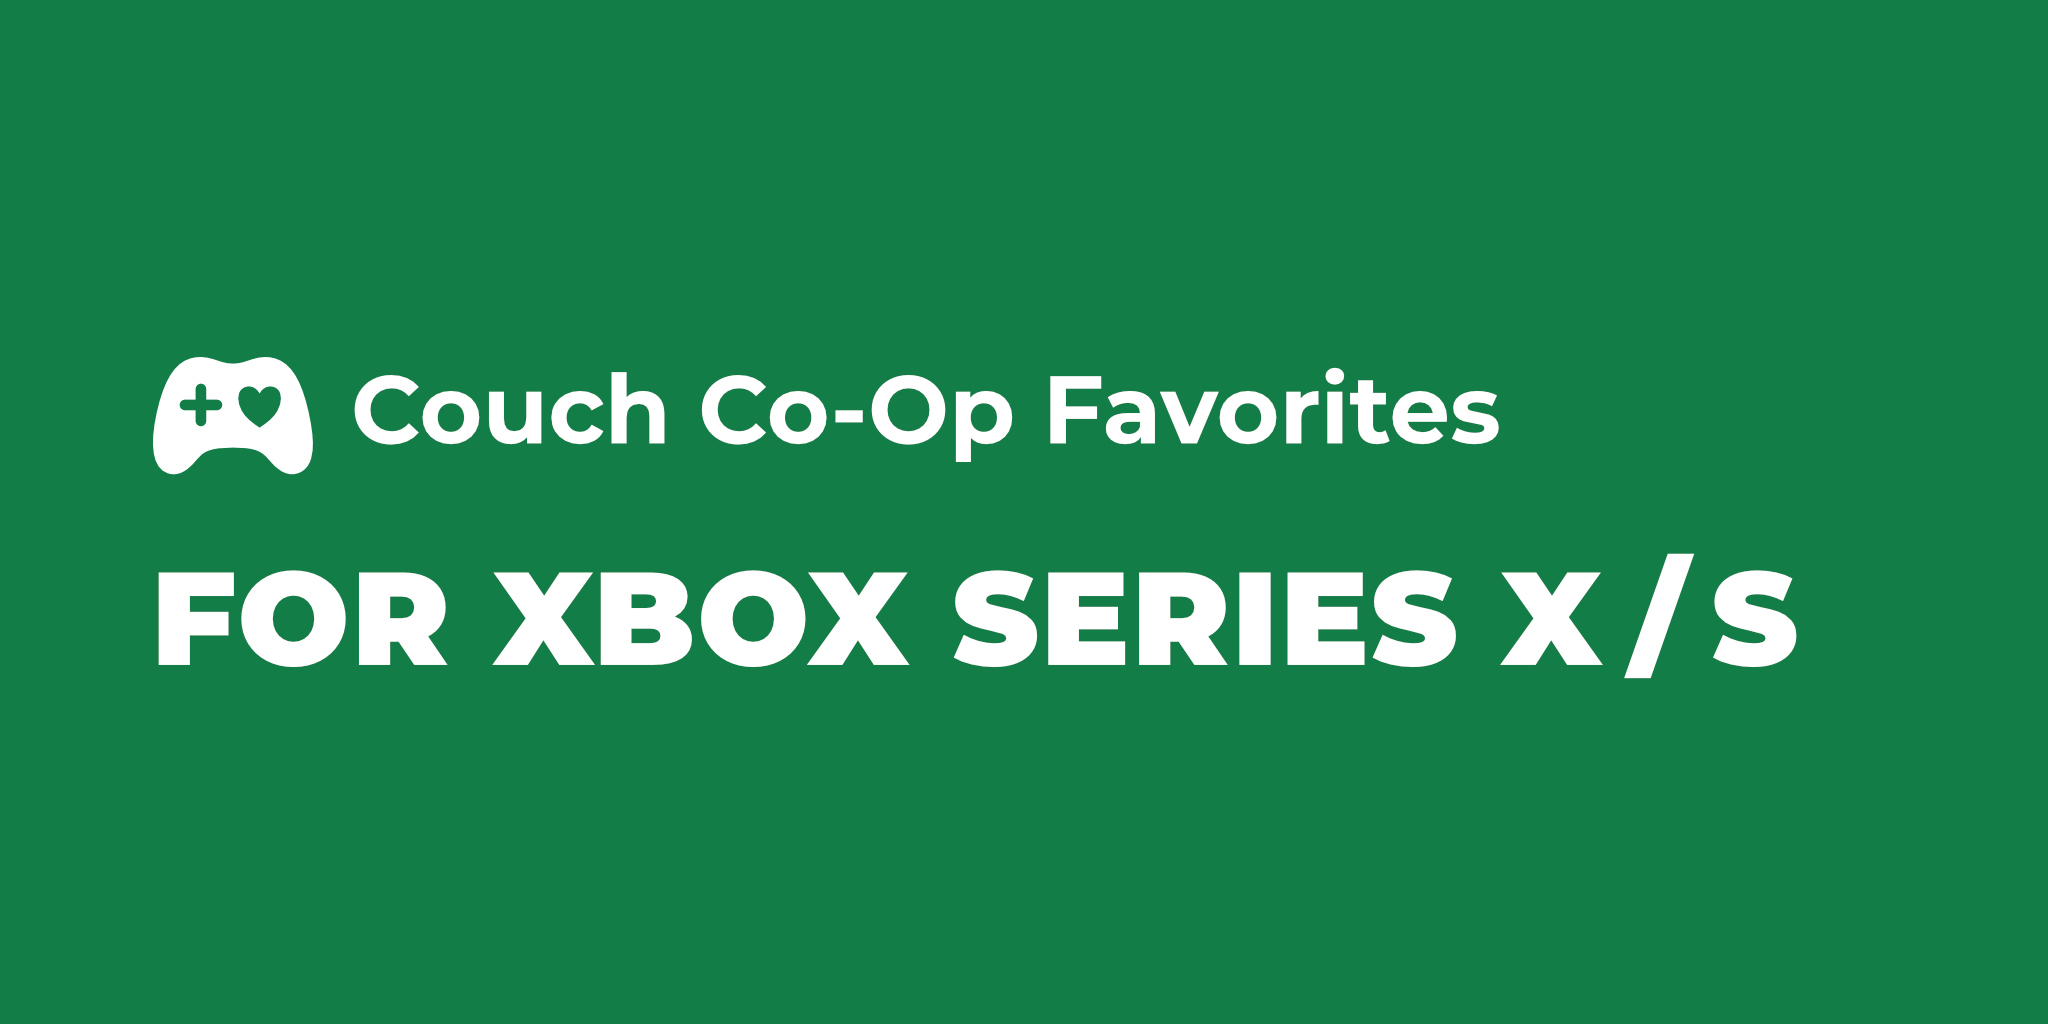 Best Split-Screen Games On The Xbox Series X